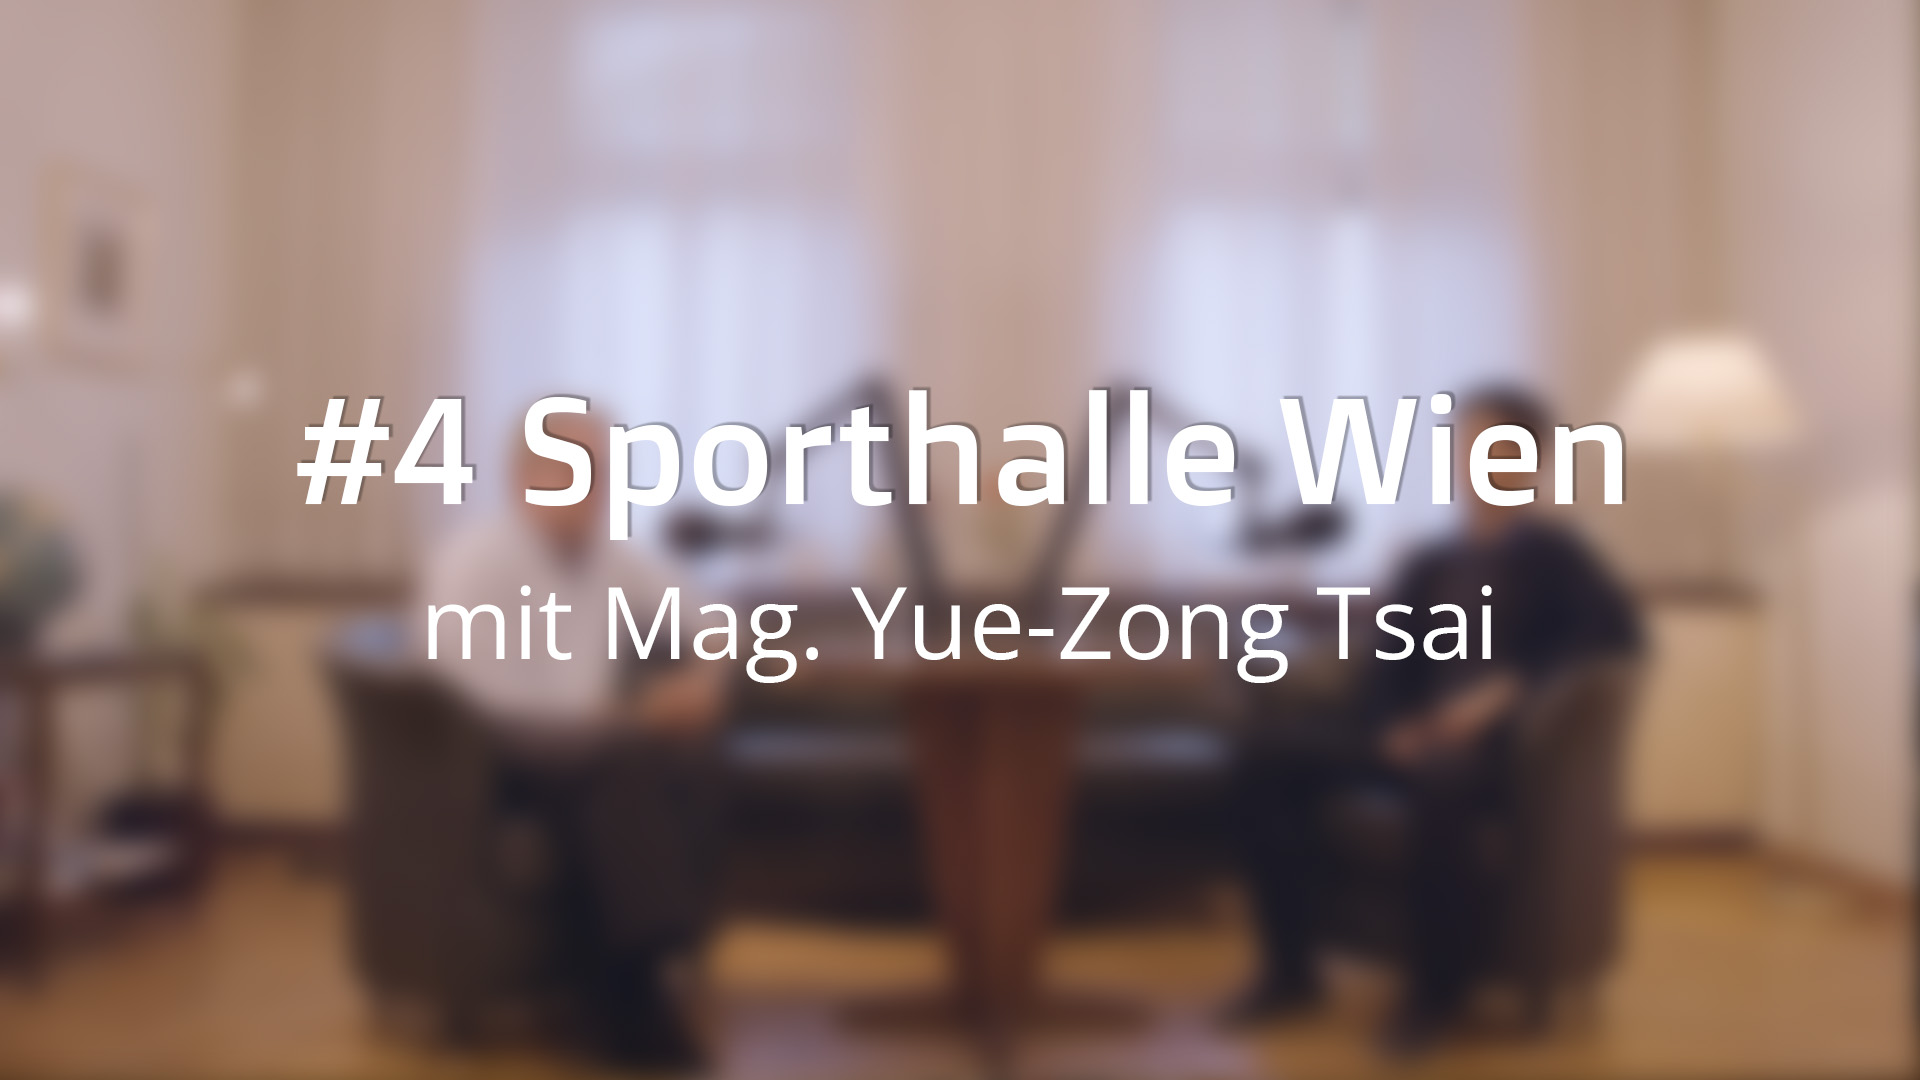 Sporthalle Wien mit Mag. Yue-Zong Tsai